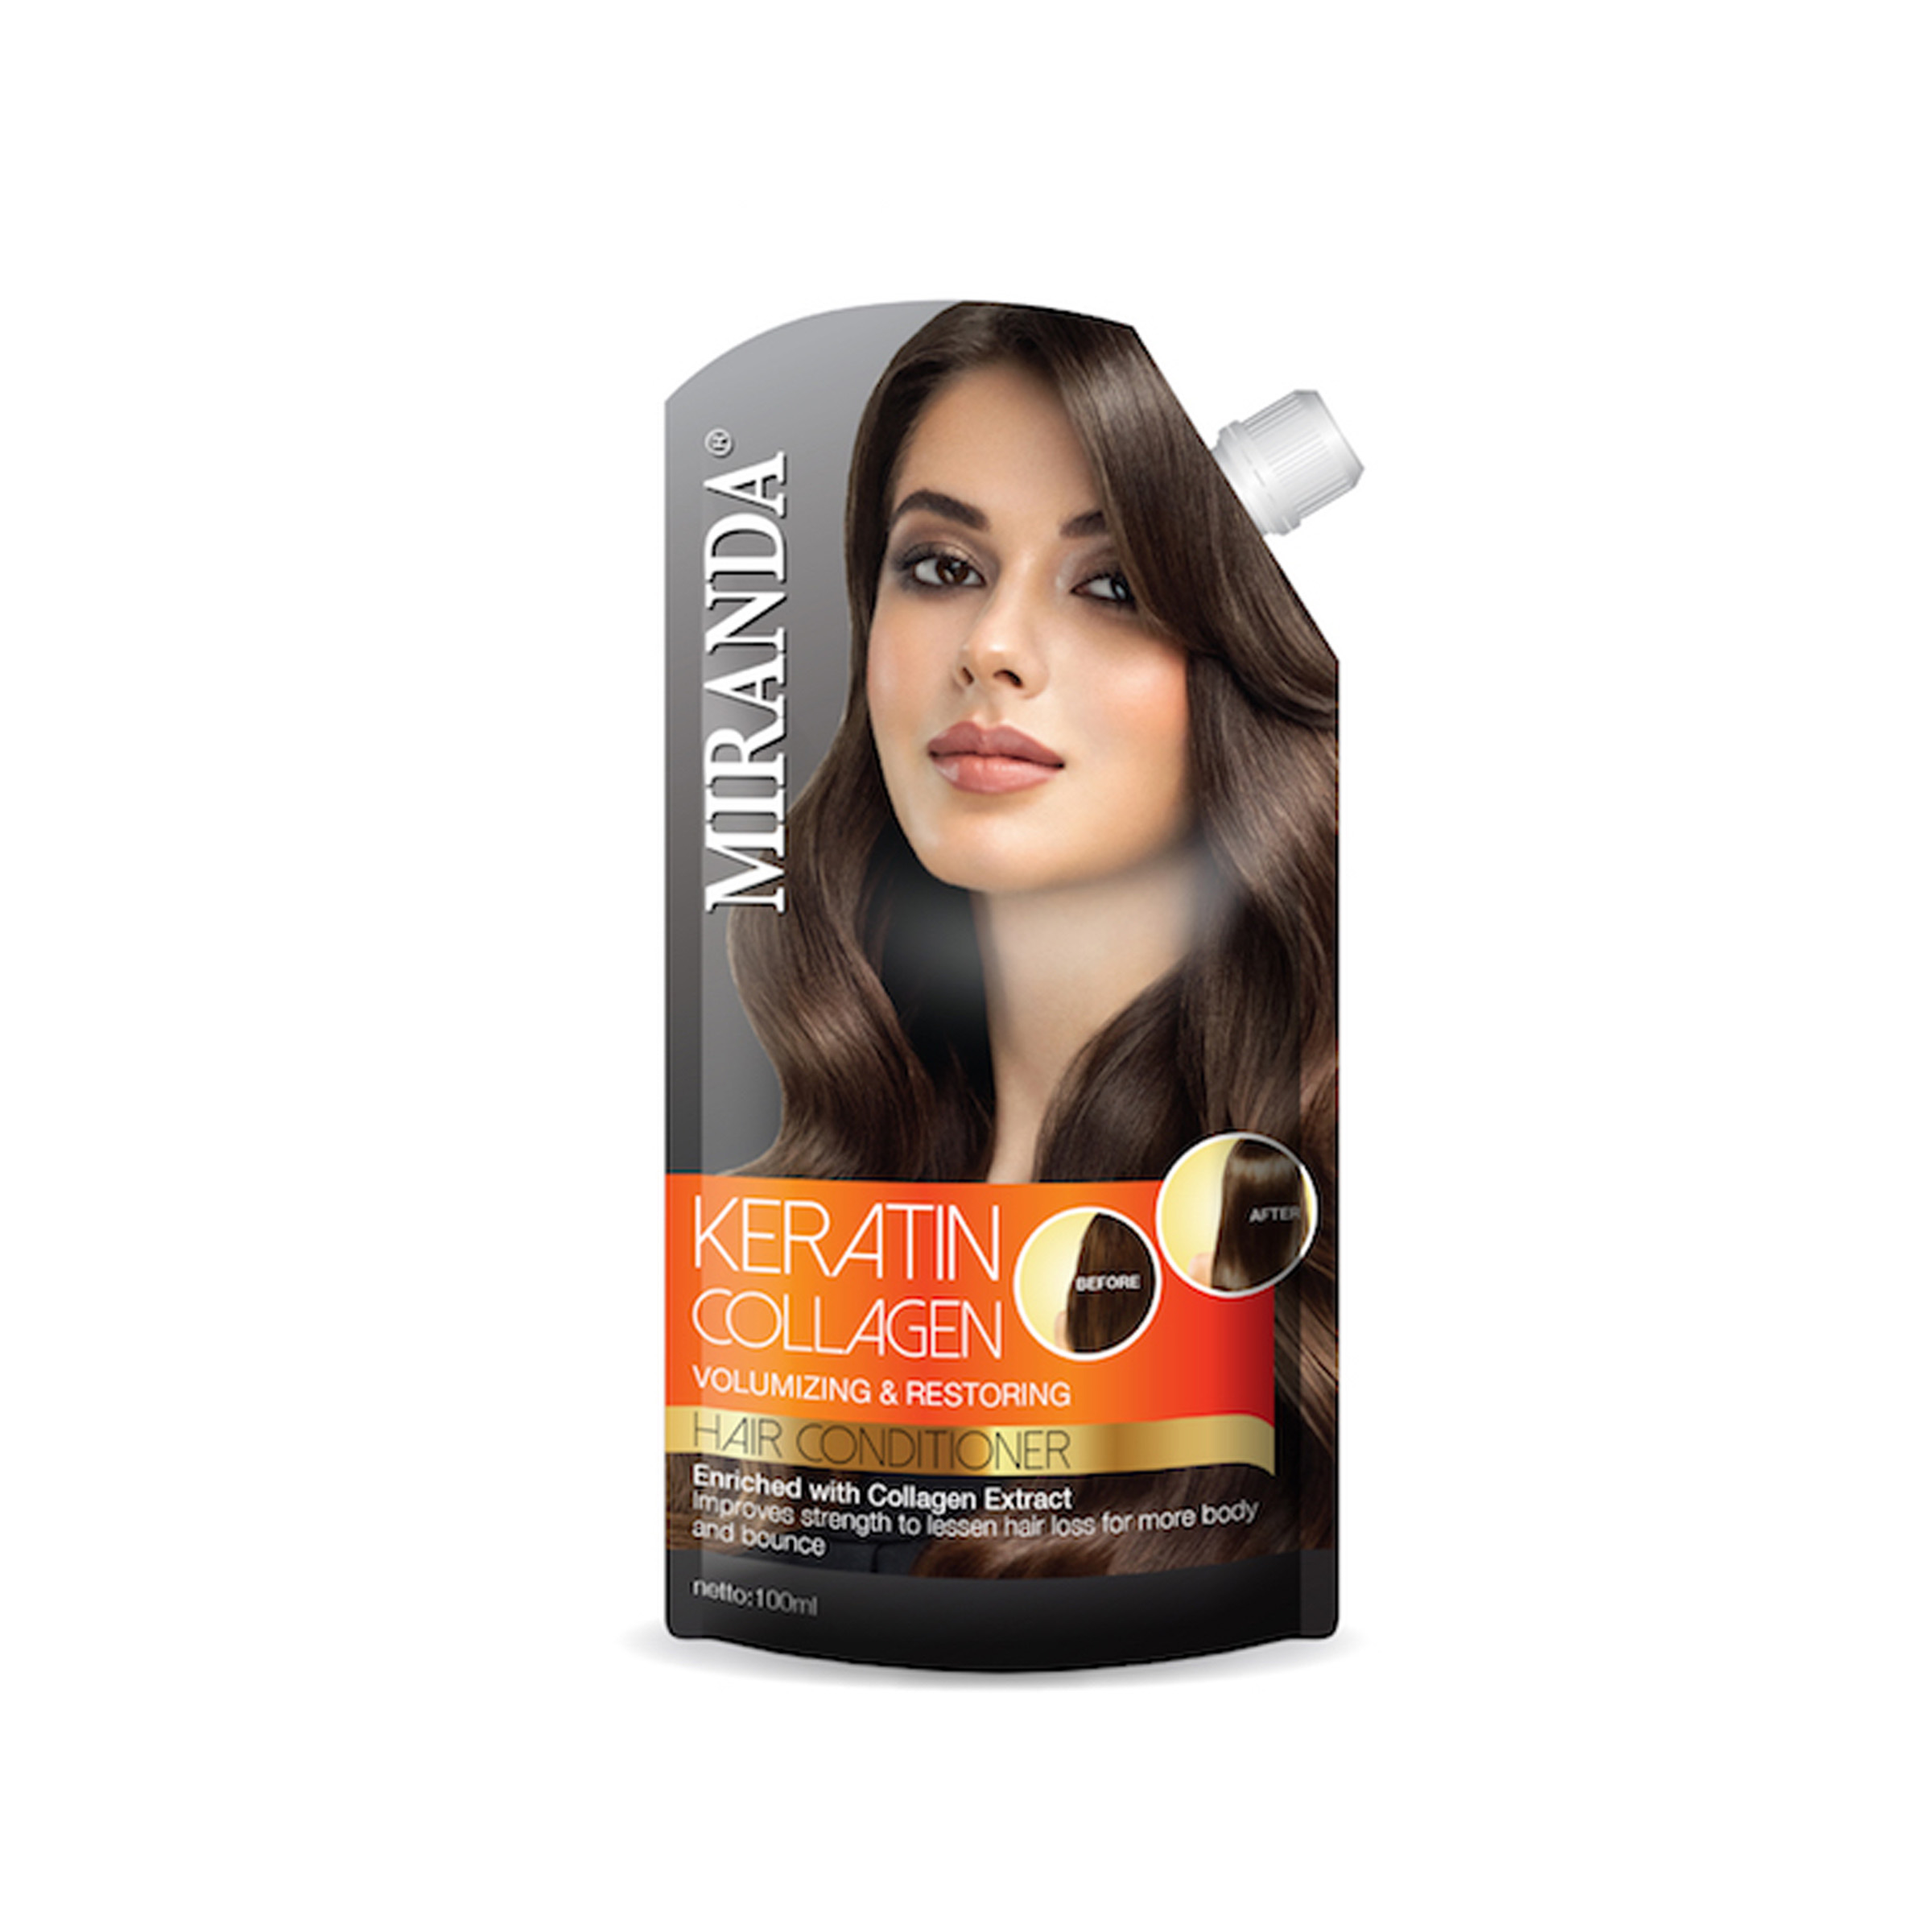 Miranda Keratin Collagen Hair Conditioner 100 ml / Kondisioner Colagen